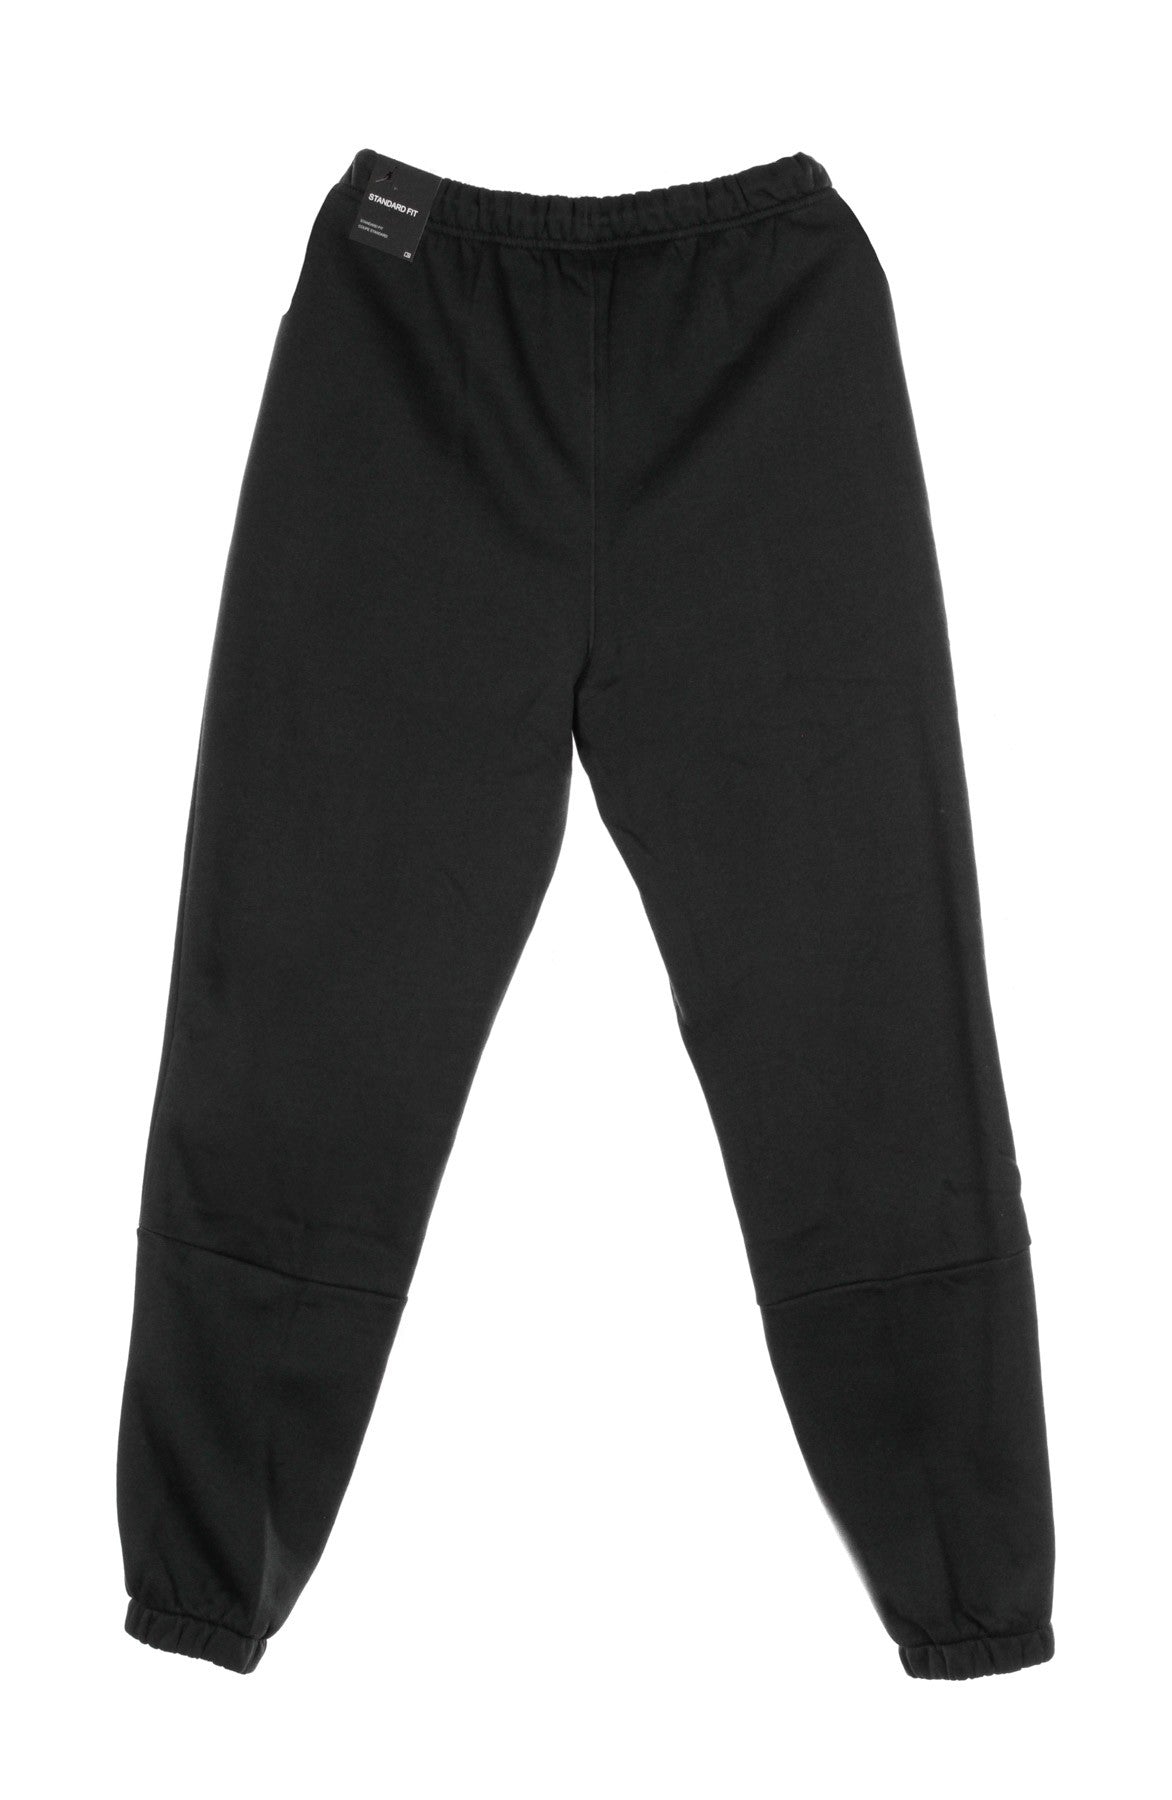 Jumpman Air Fleece Men's Fleece Tracksuit Pants Black/black/black/white